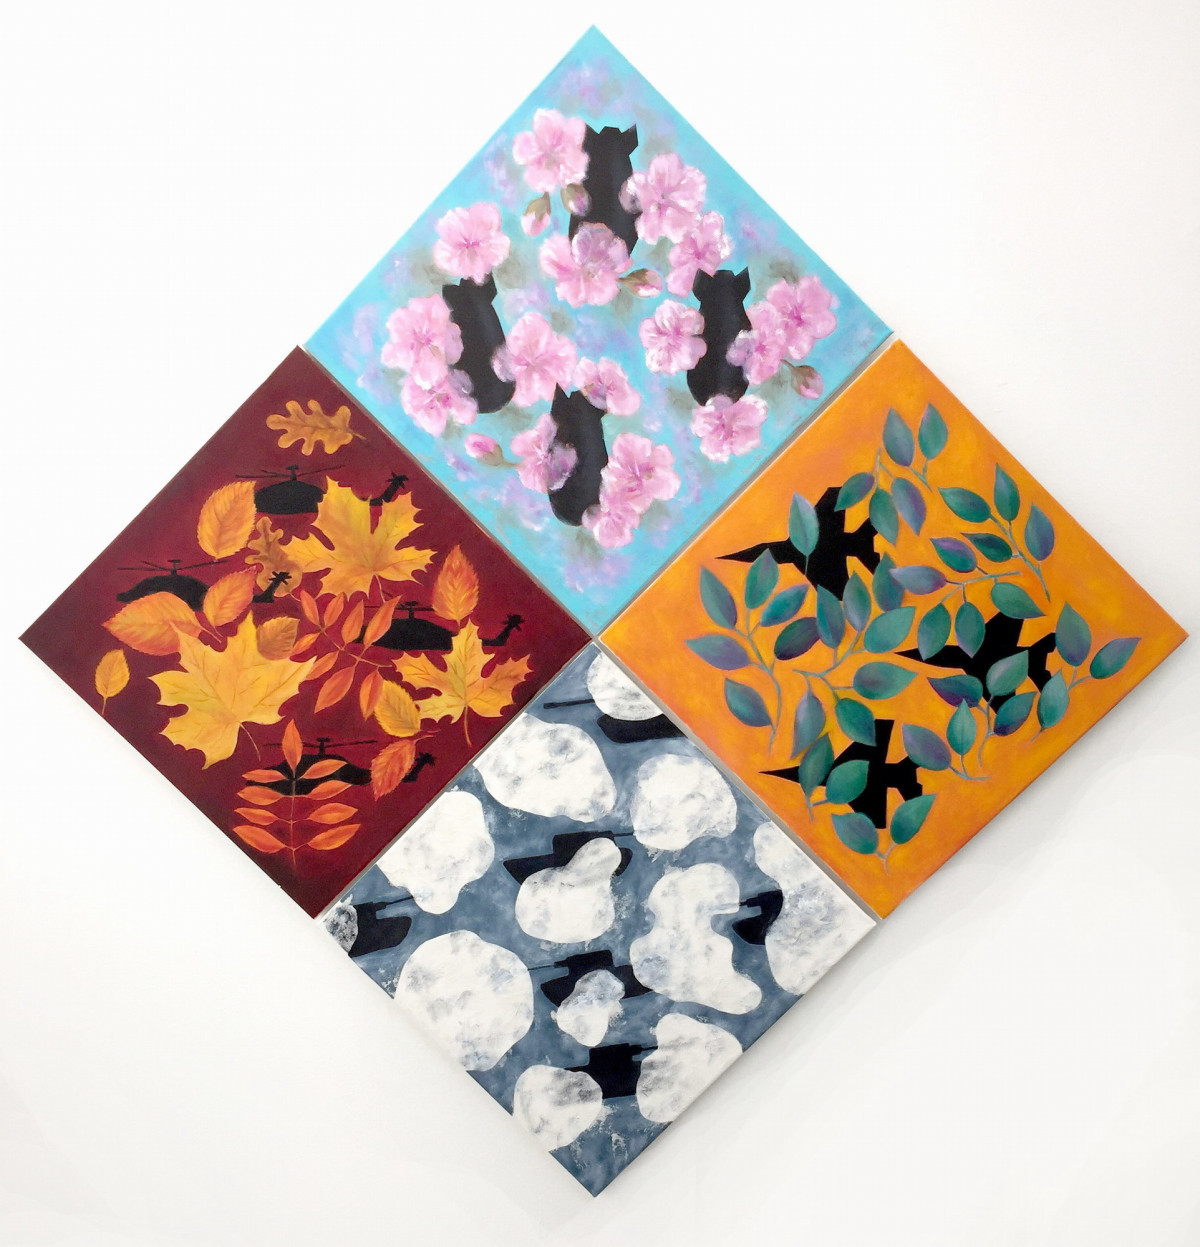 'Four Seasons'; Oil on four canvases, 60 x 60cm